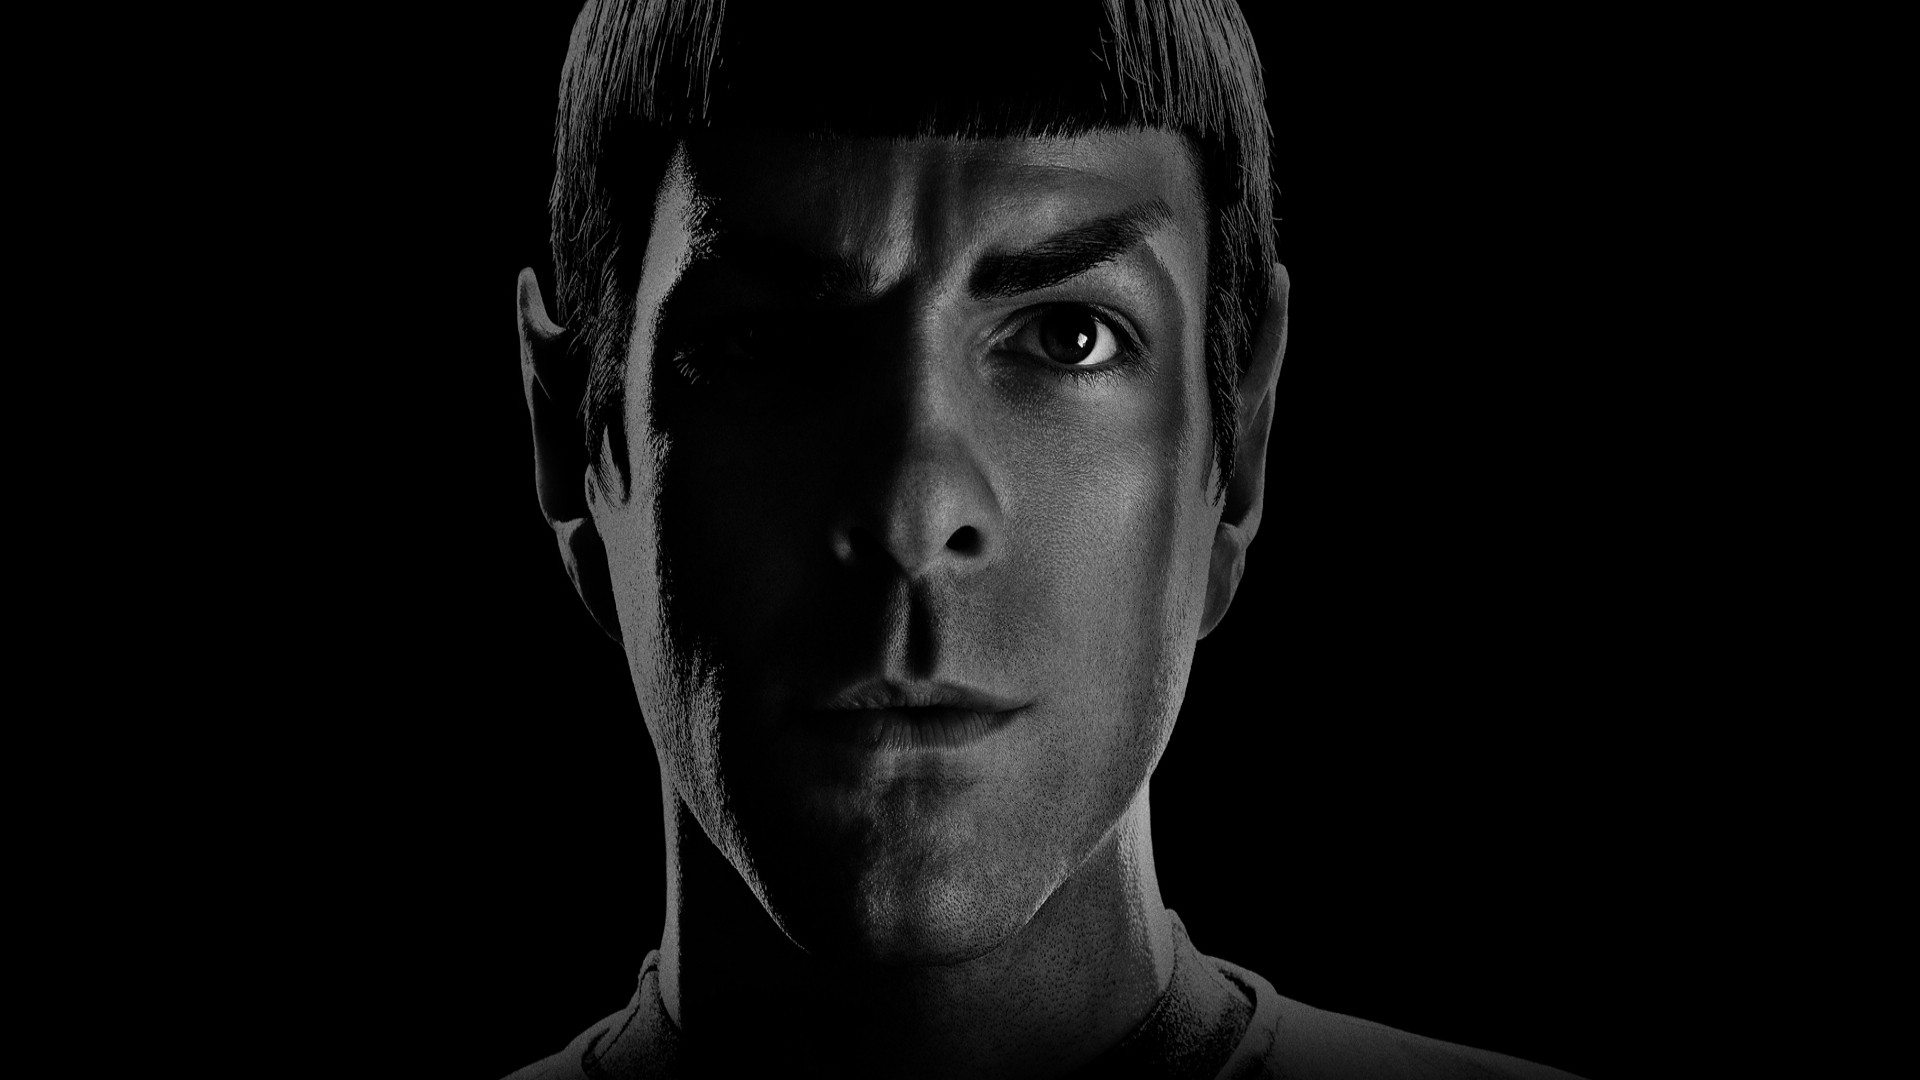 General 1920x1080 Star Trek Zachary Quinto men face movies Star Trek Kelvin Timeline actor monochrome Spock science fiction Science Fiction Men